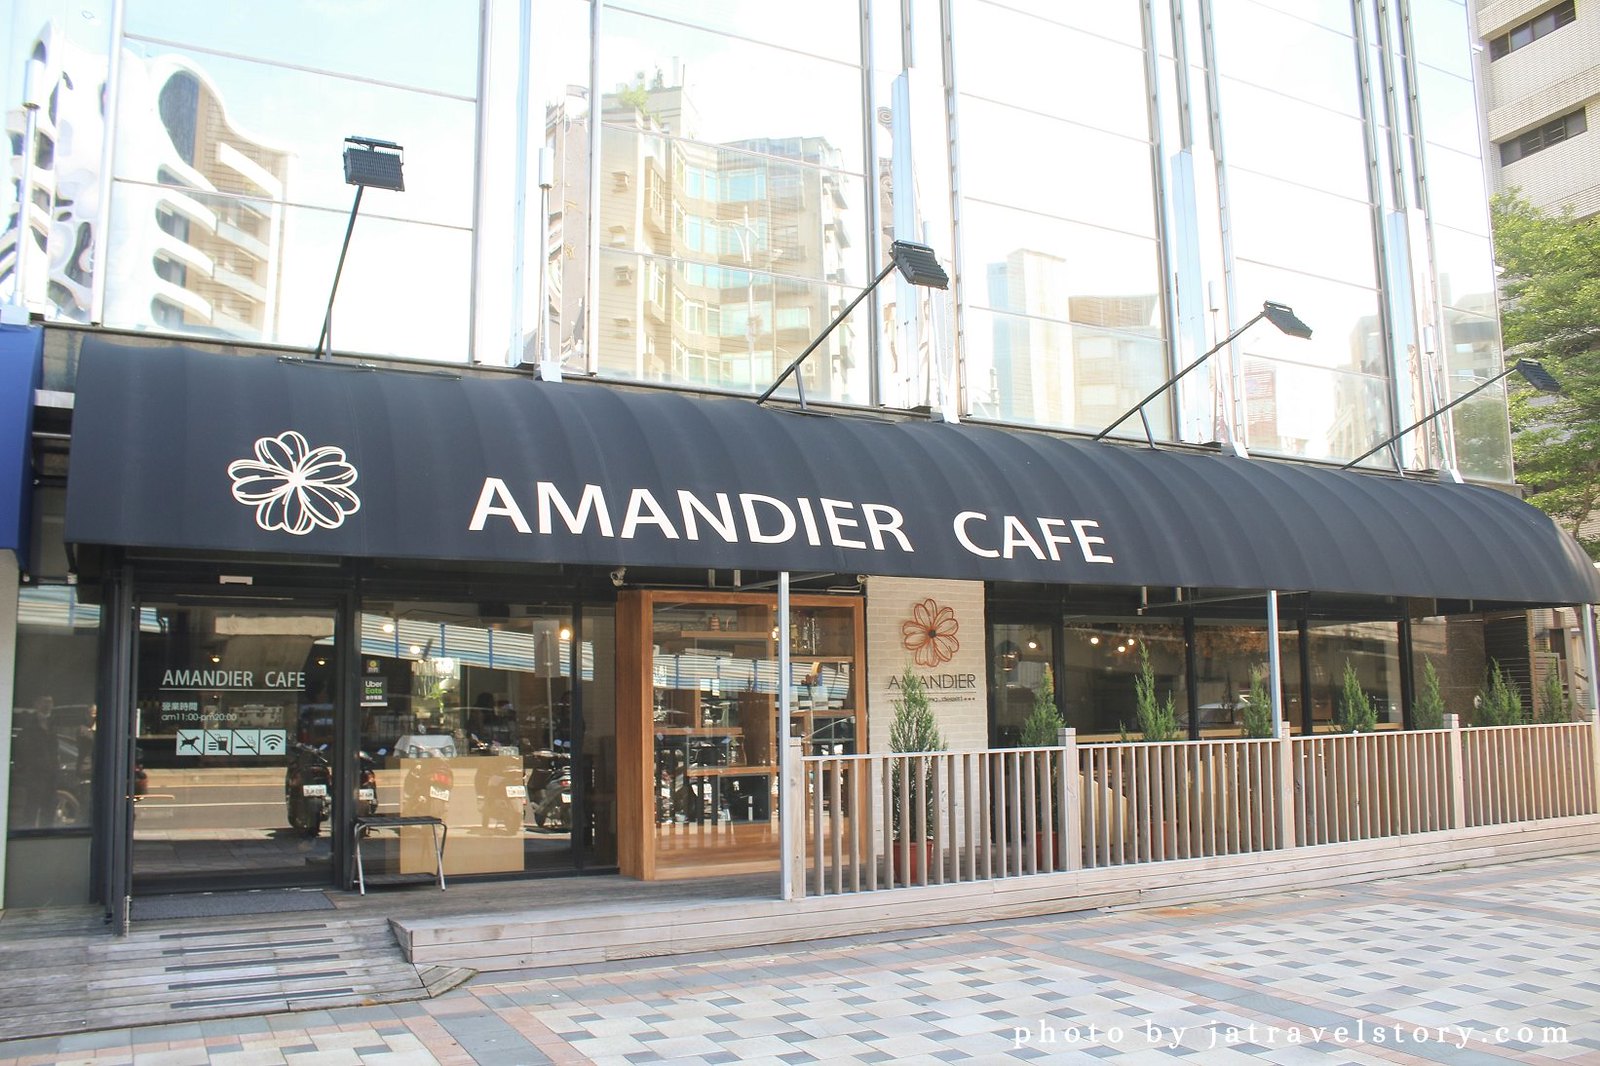 Amandier Cafe 港式套餐均一價360元,在咖啡廳吃港式點心、喝咖啡吃甜點！【捷運忠孝新生】 雅蒙蒂咖啡/ 雅蒙蒂創意飲食 @J&amp;A的旅行